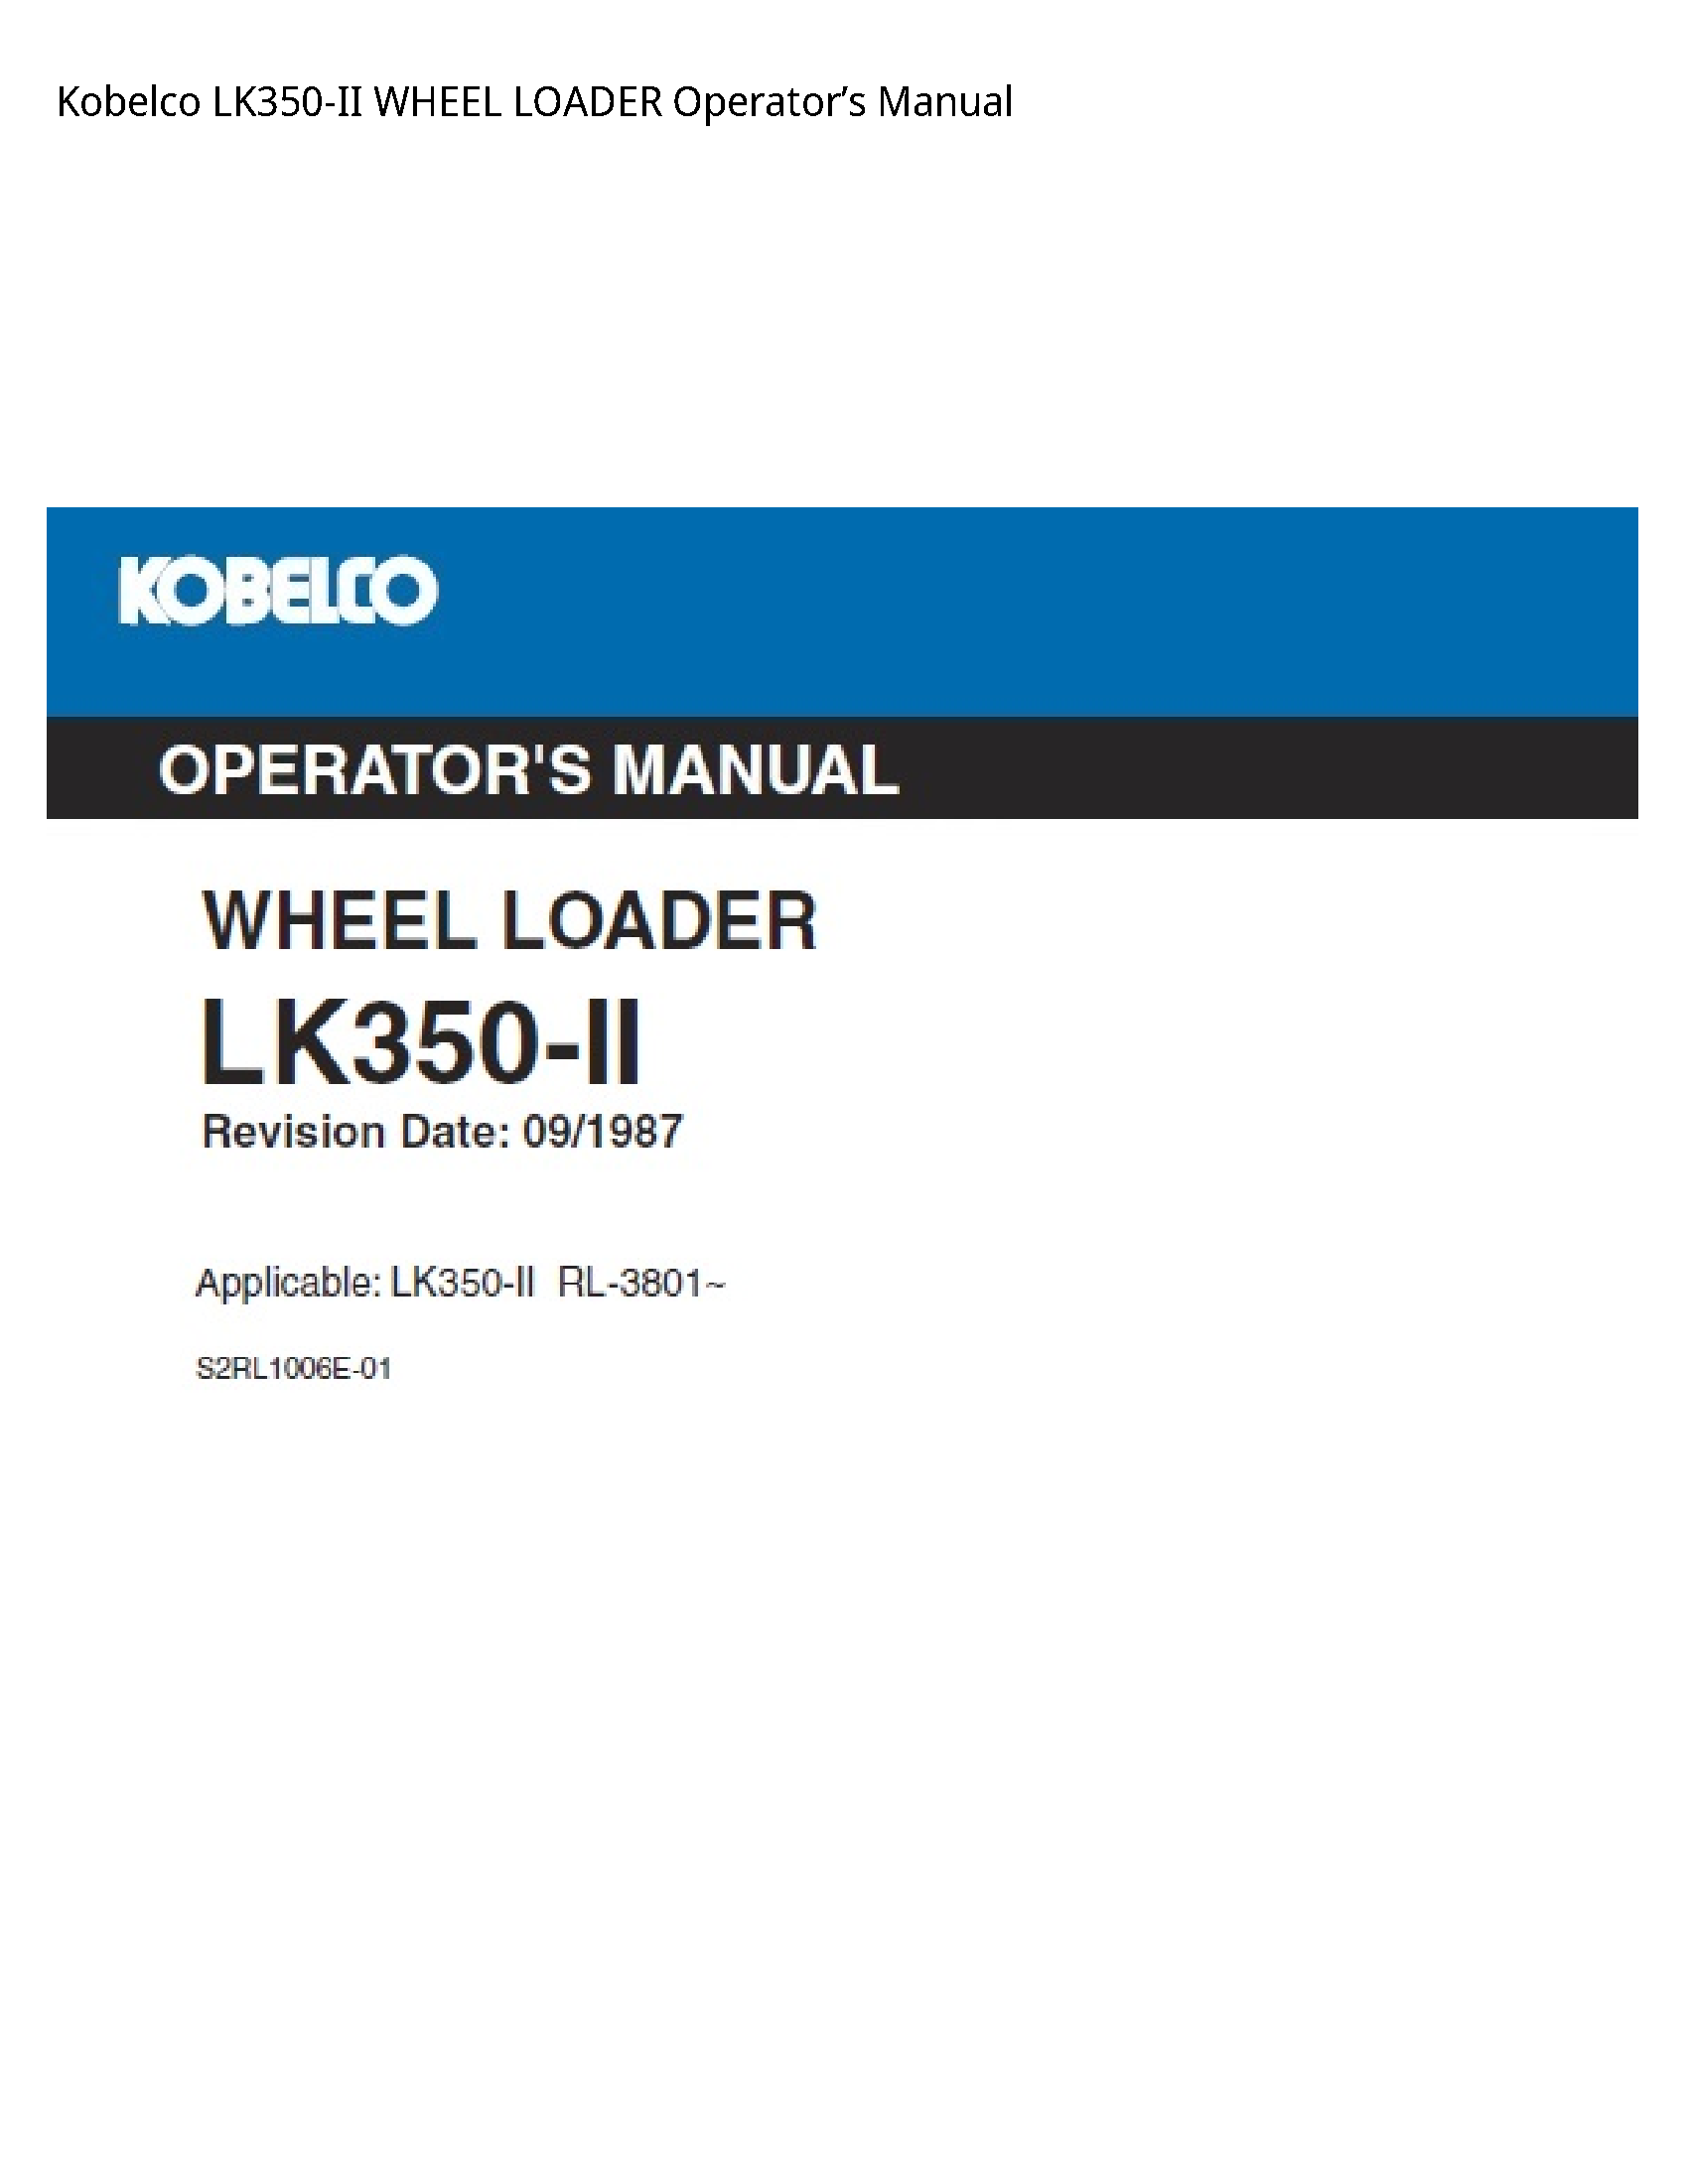 Kobelco LK350-II WHEEL LOADER Operator’s manual